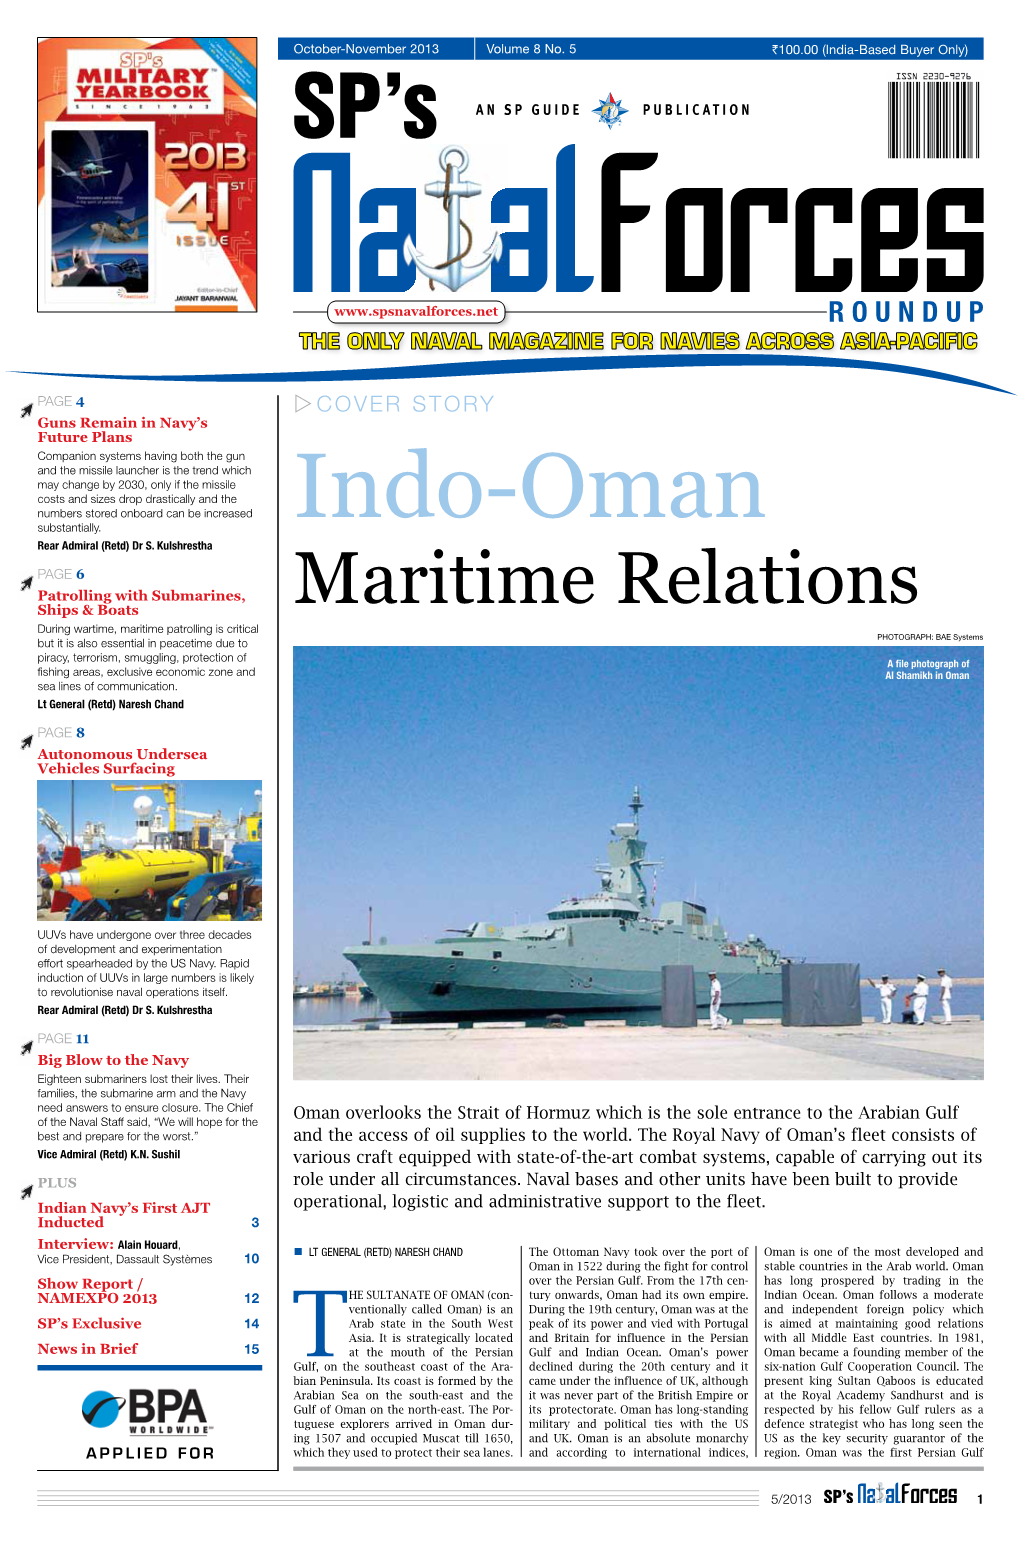 Maritime Relations